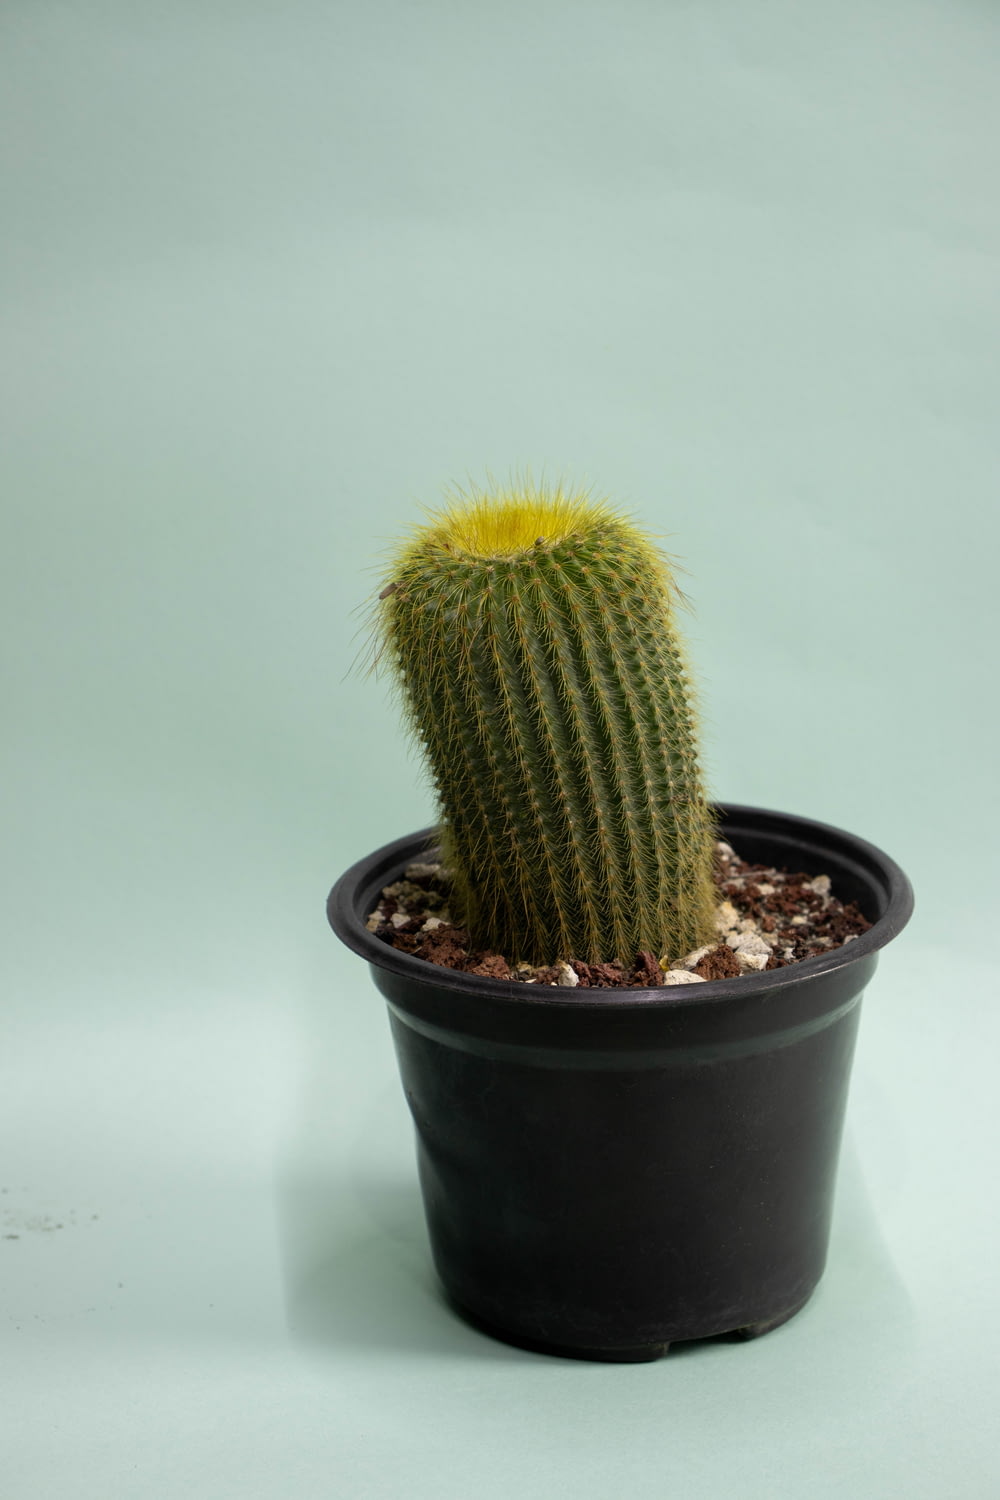 a small cactus in a black pot